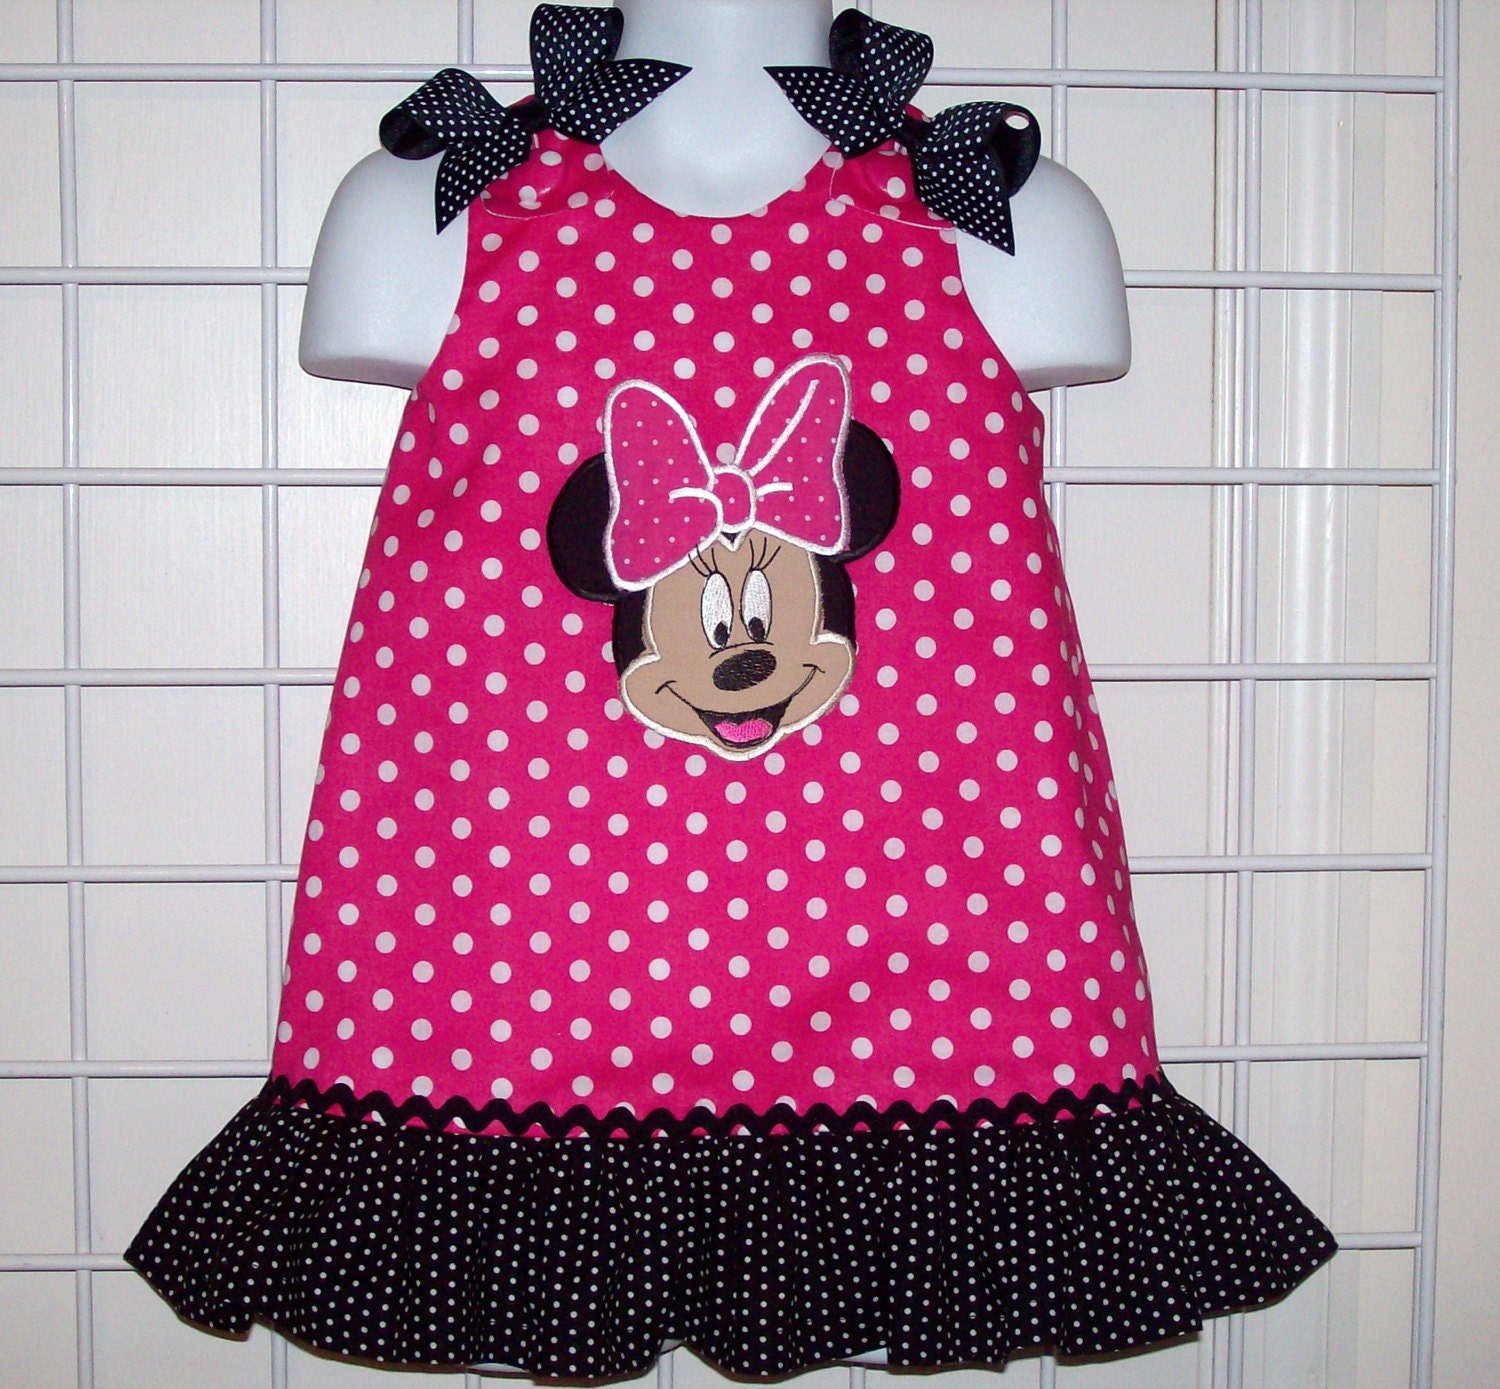 Hot Pink Polka Dot Minnie Mouse Face Applique Monogram Dress | Etsy